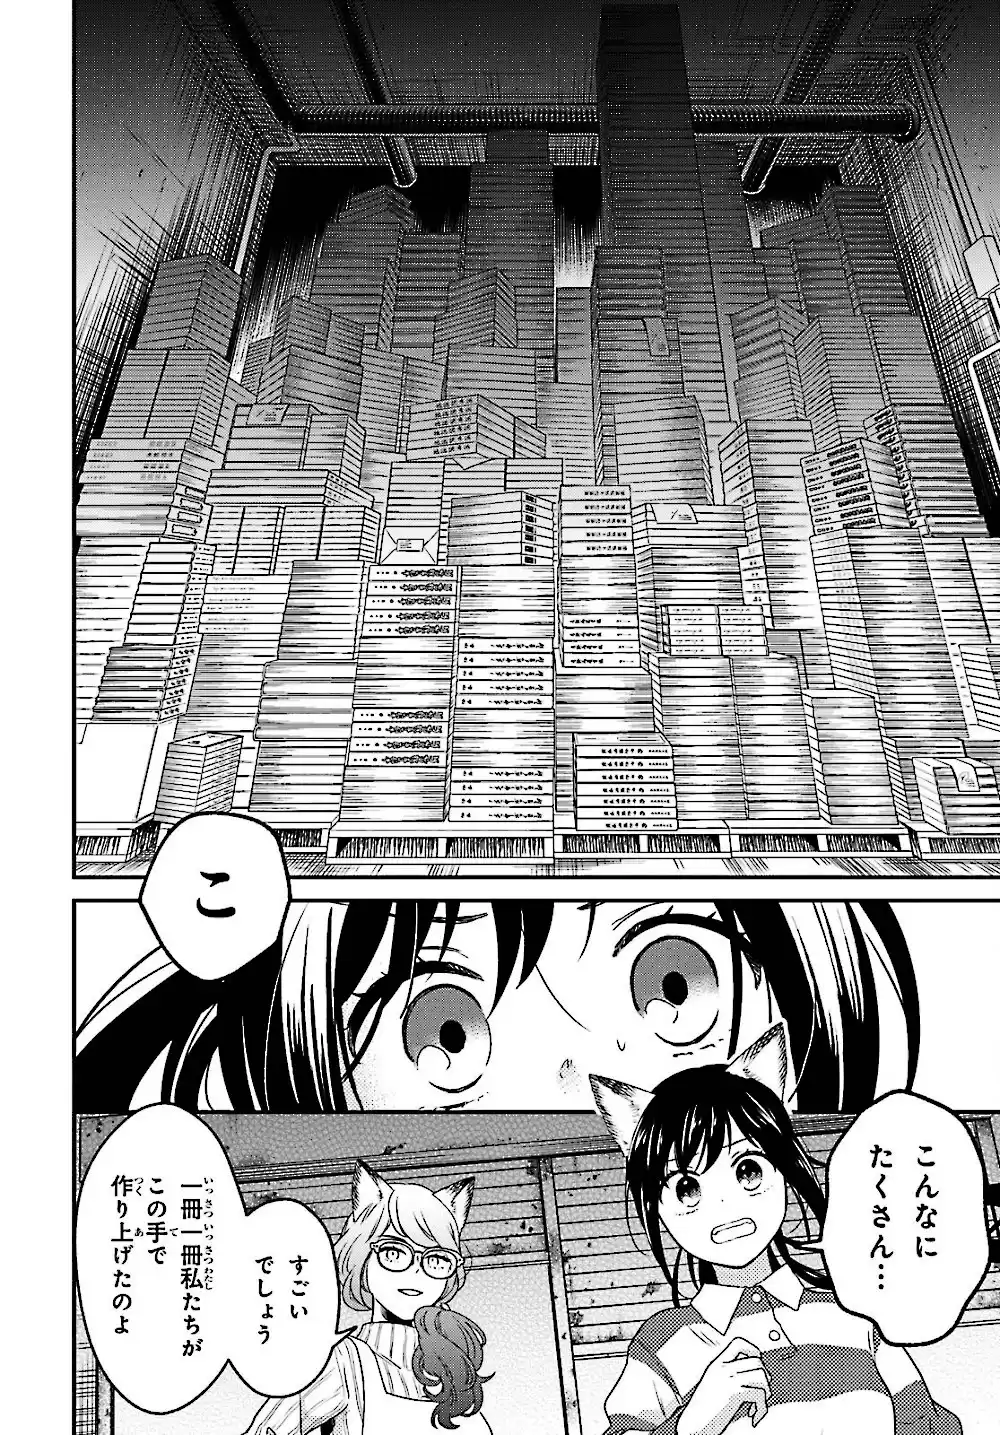 23 Manga E6is